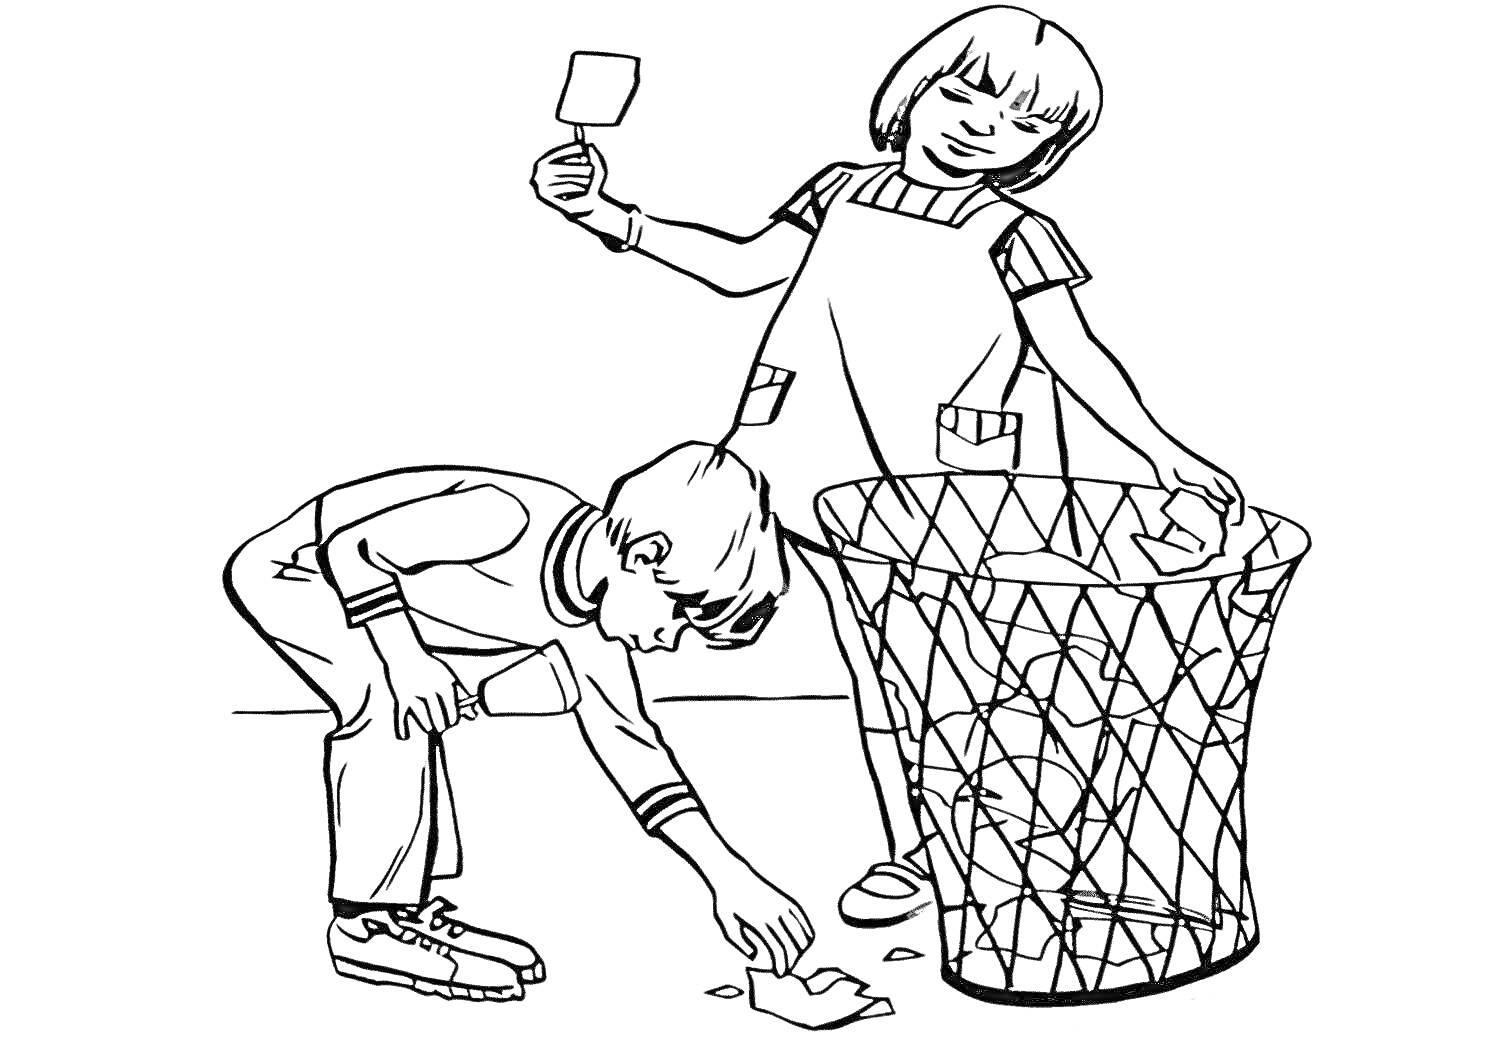 Дети собирают мусор в корзину